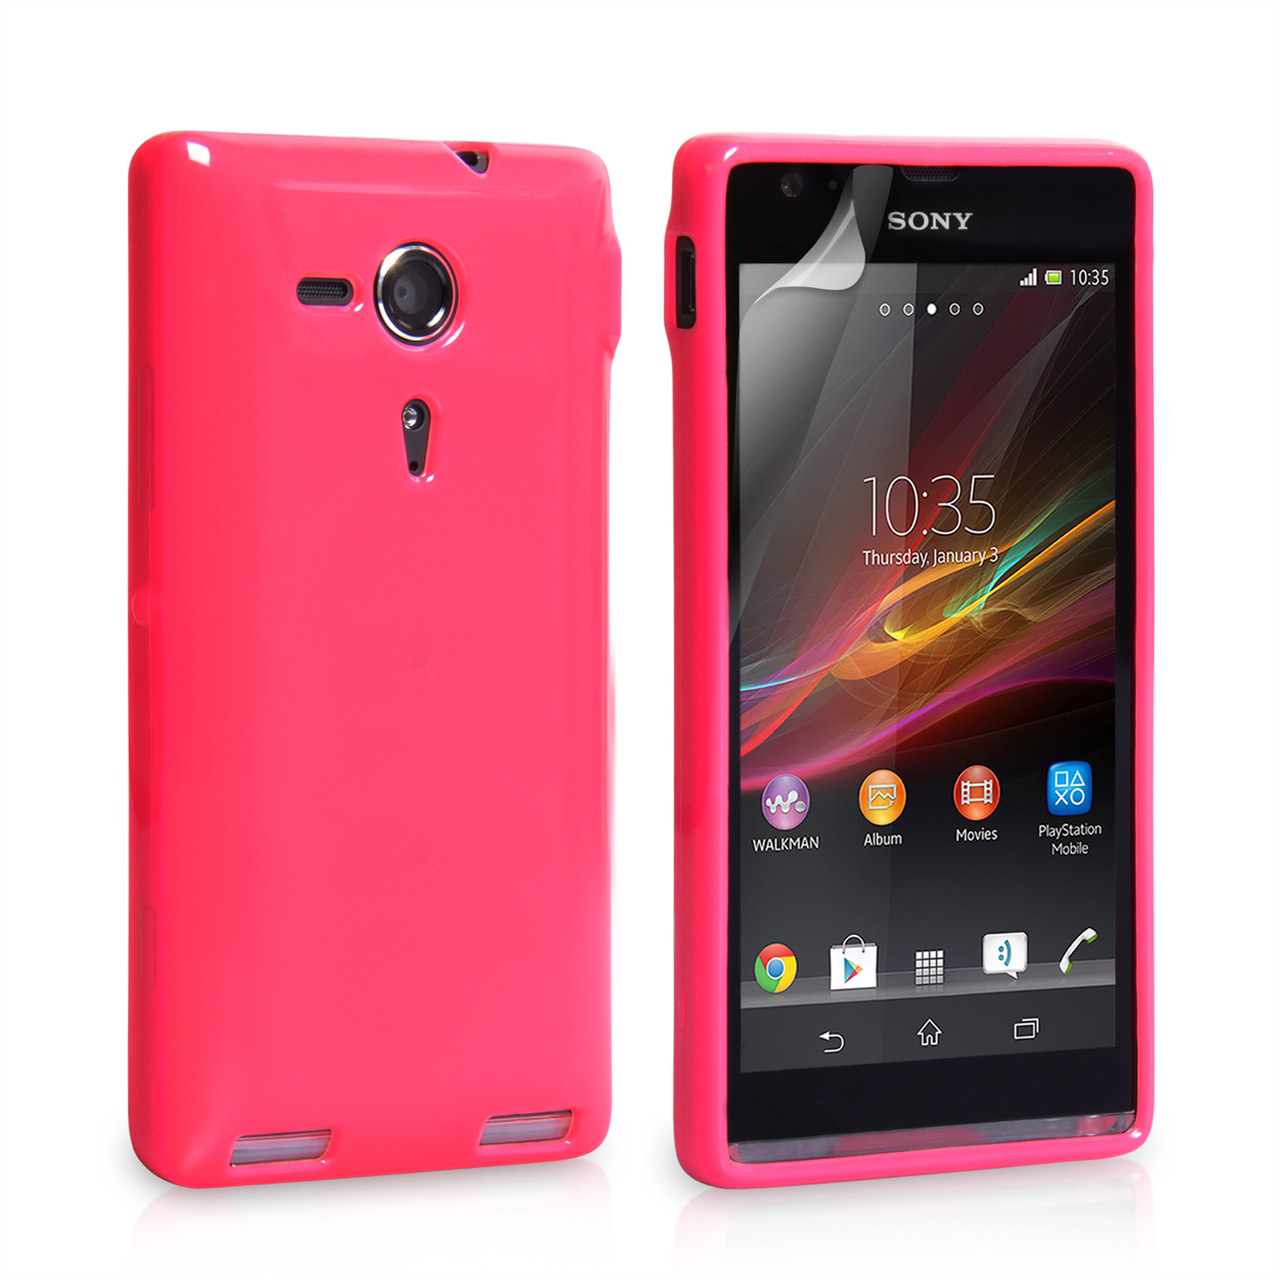 Plakken Illustreren ze YouSave Accessories Sony Xperia SP Silicone Gel Case - Pink